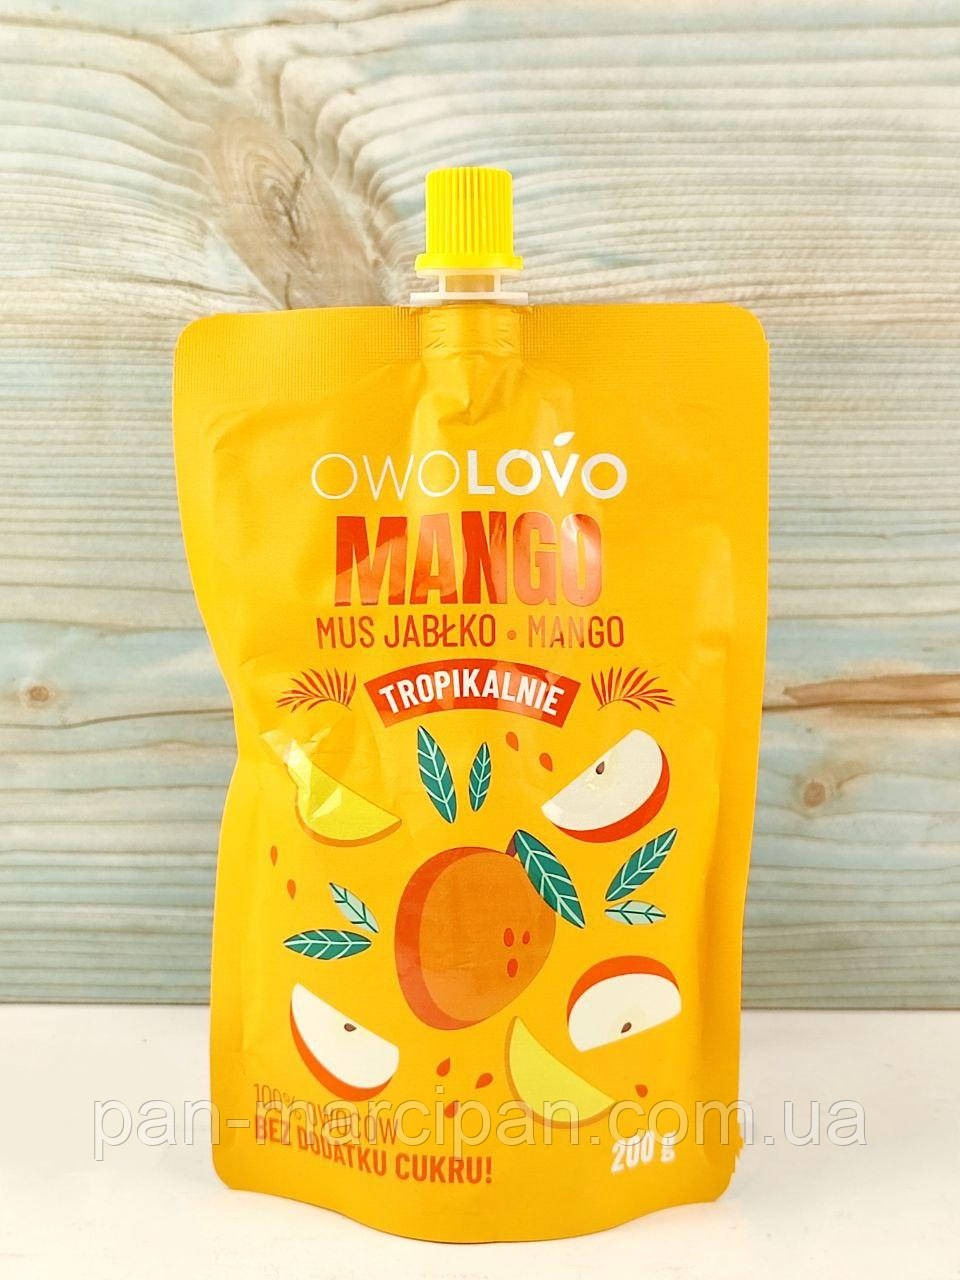 Фруктовий мус яблуко-манго Owolovo Mango 200 г Польща